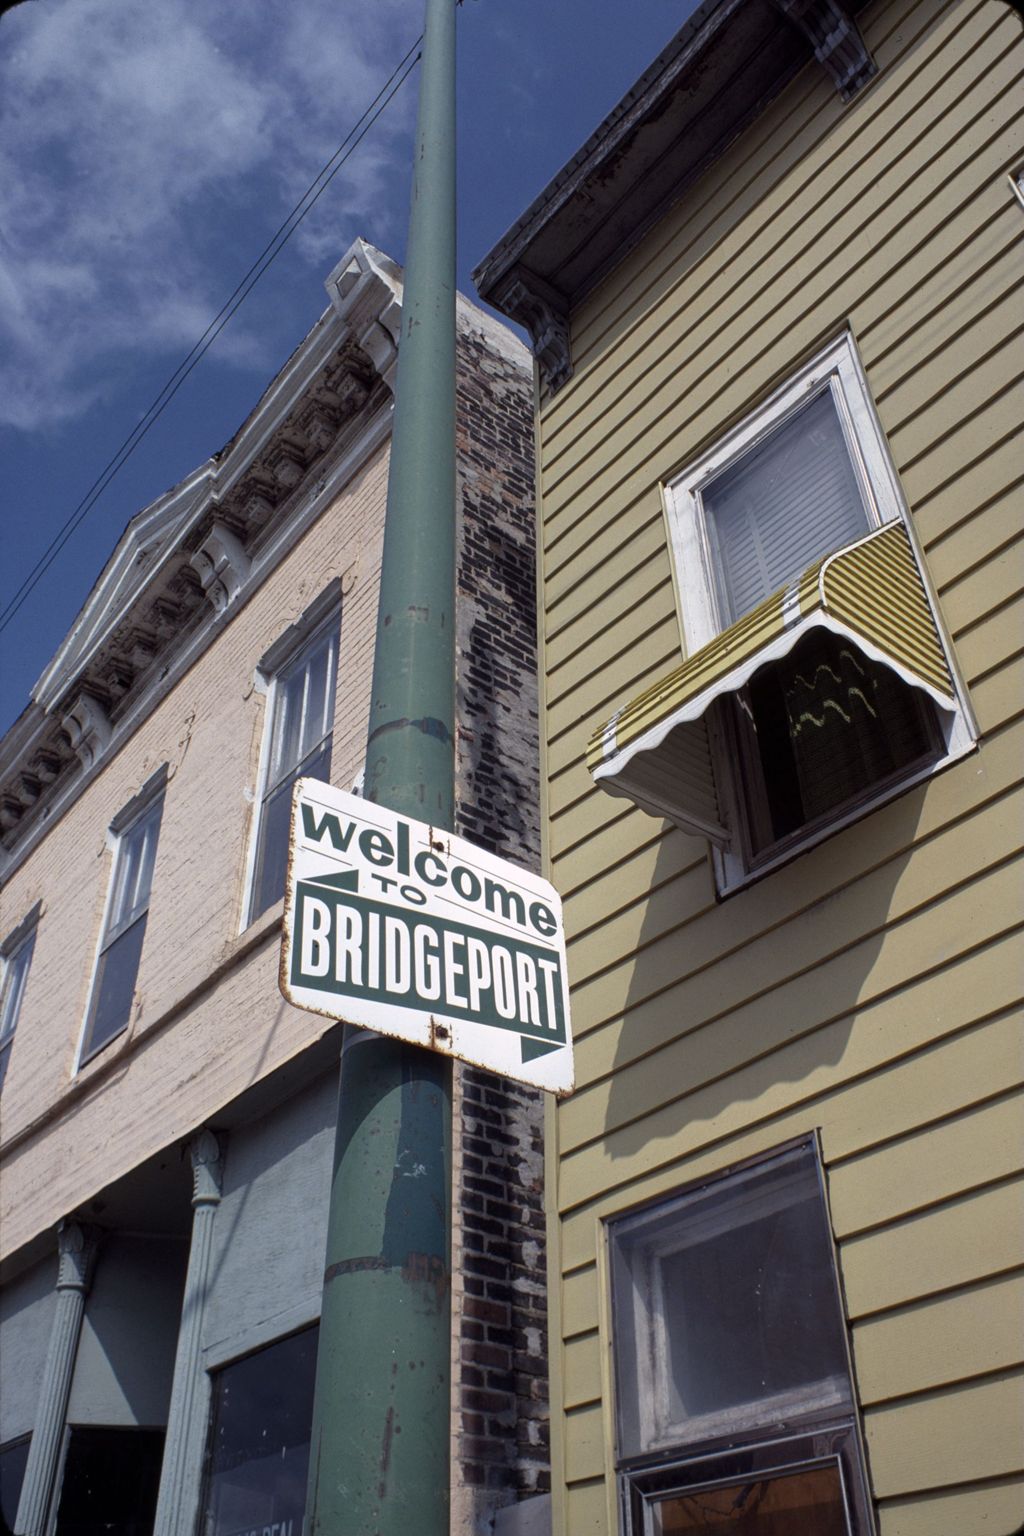 Miniature of Welcome to Bridgeport sign